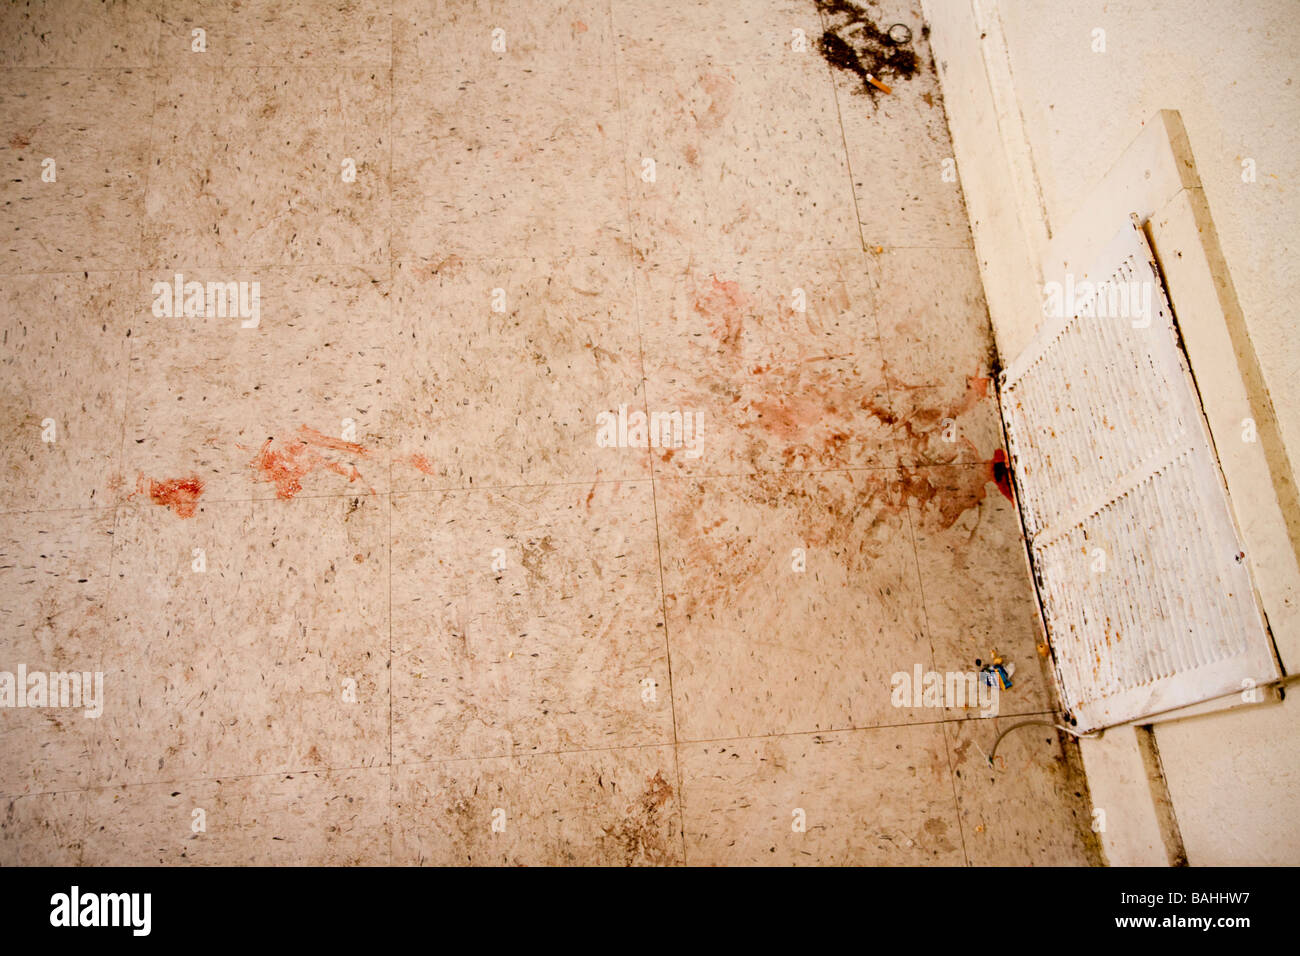 Blood splatter, floor, dirty, filthy, narcotics, heroin, abuser, user, junkie, Stock Photo